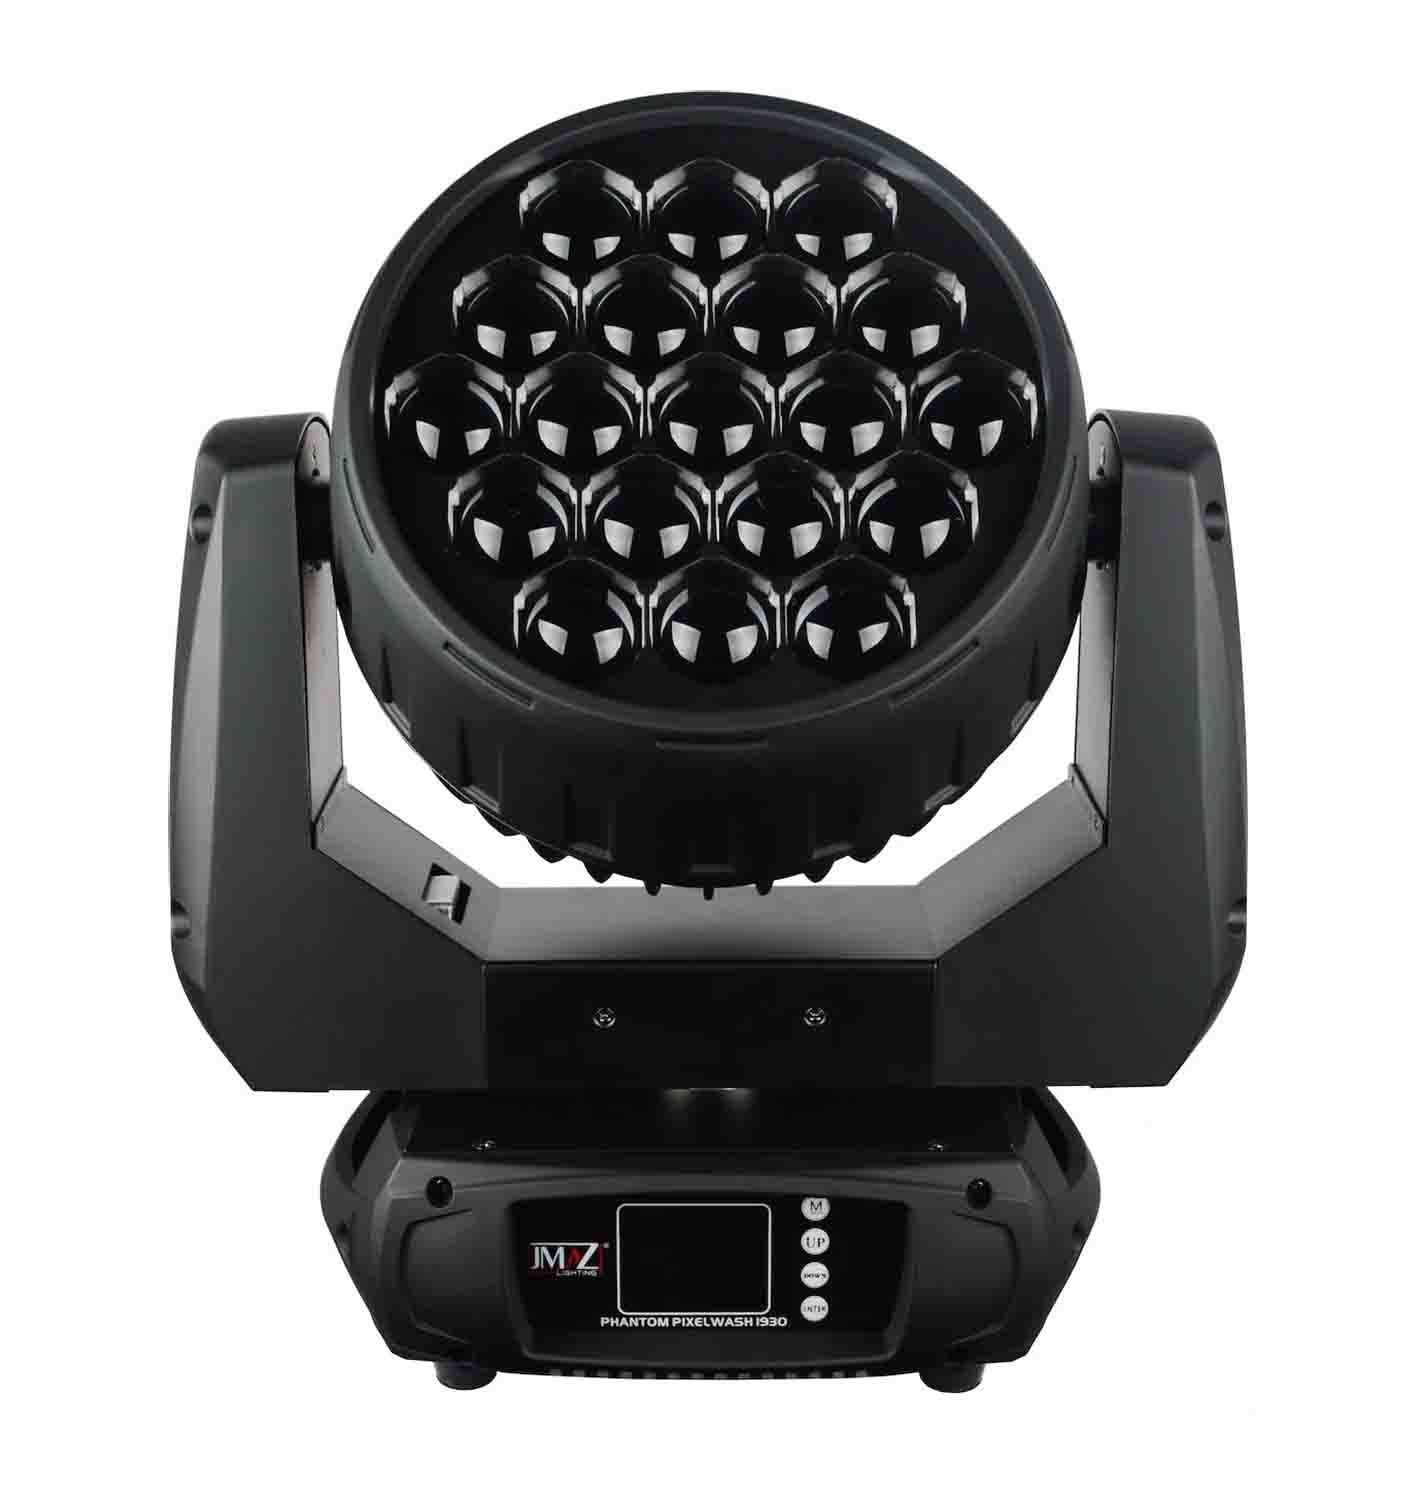 JMAZ Phantom Pixel Wash 1930Z LED Wash Moving Head with Zoom 6~60 degree - Black - Hollywood DJ